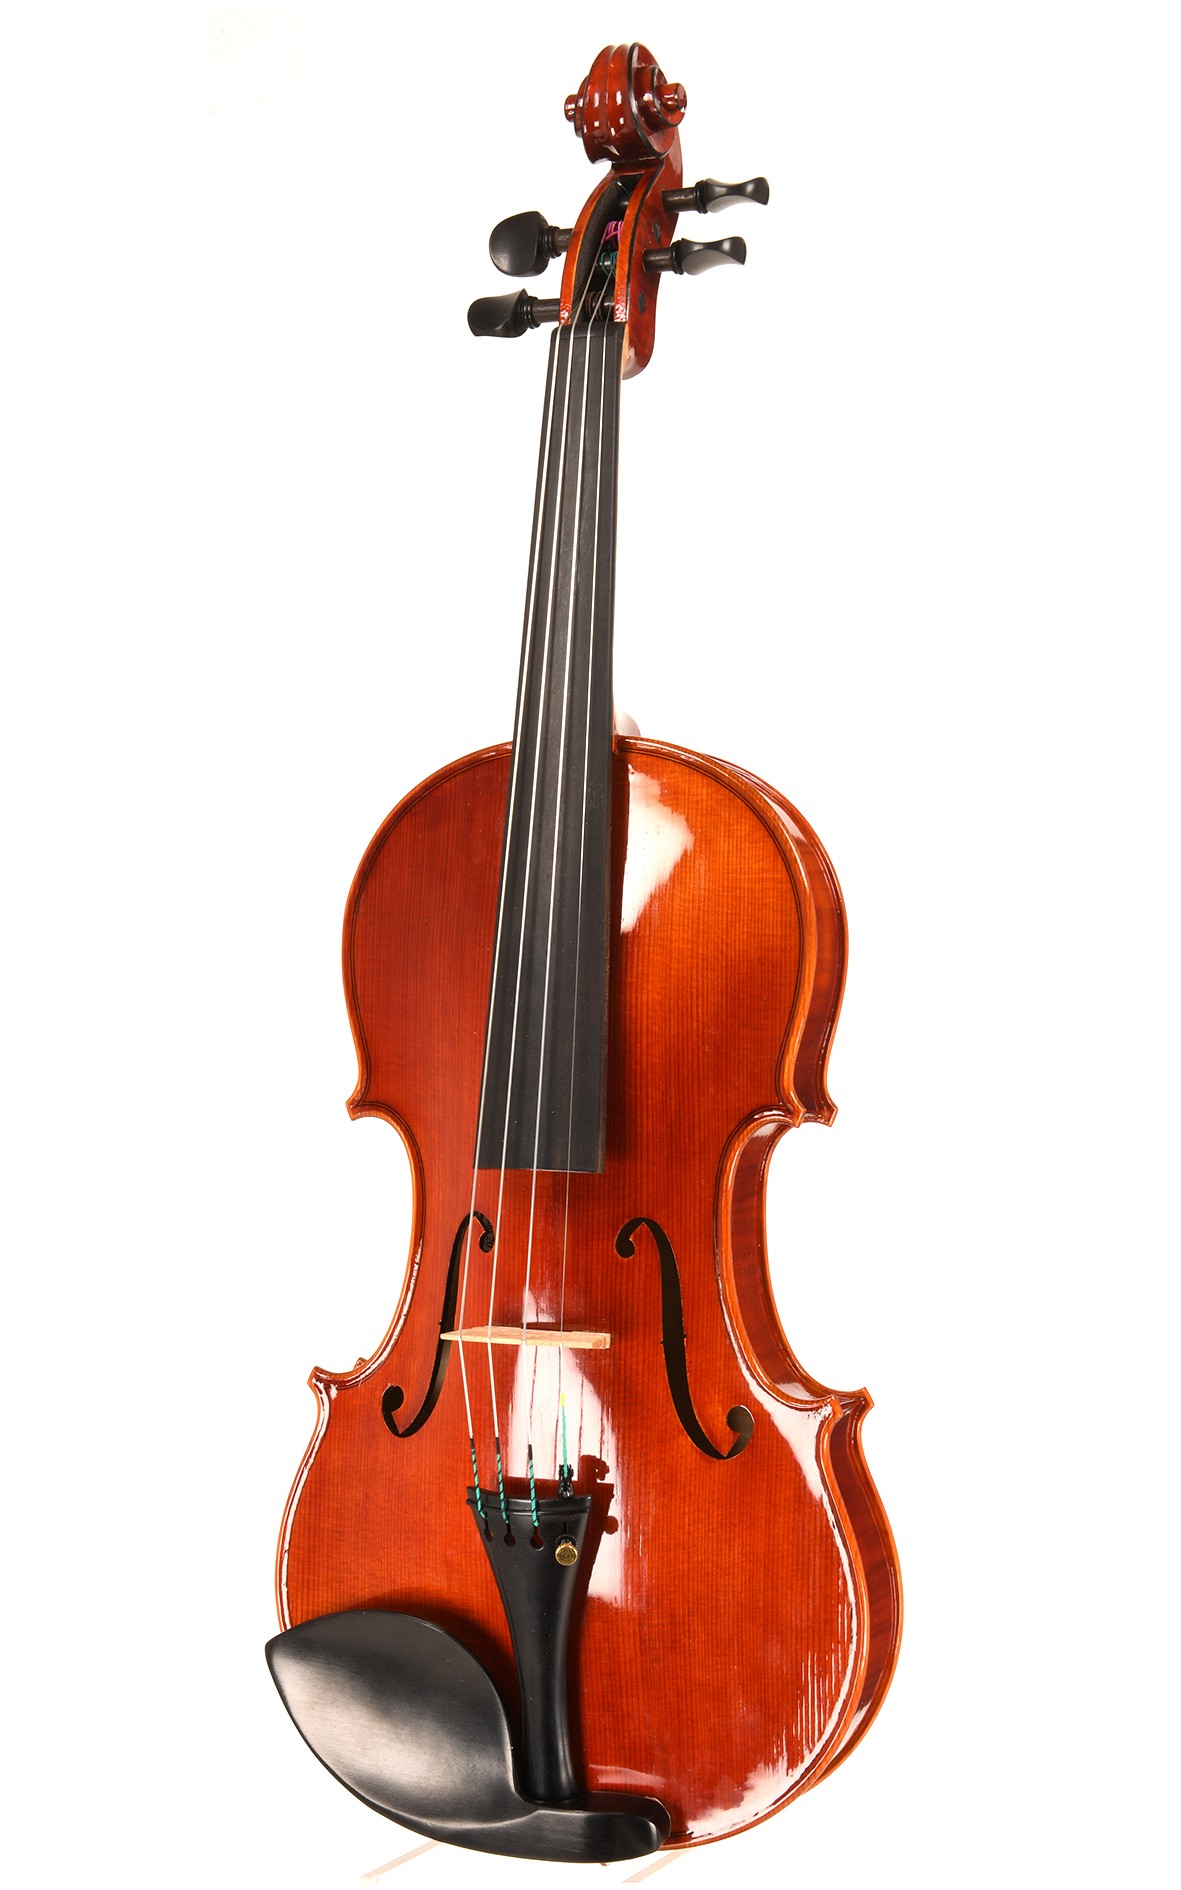 来自克雷莫纳的 Officina Mauro Lucini 6 号小提琴。6